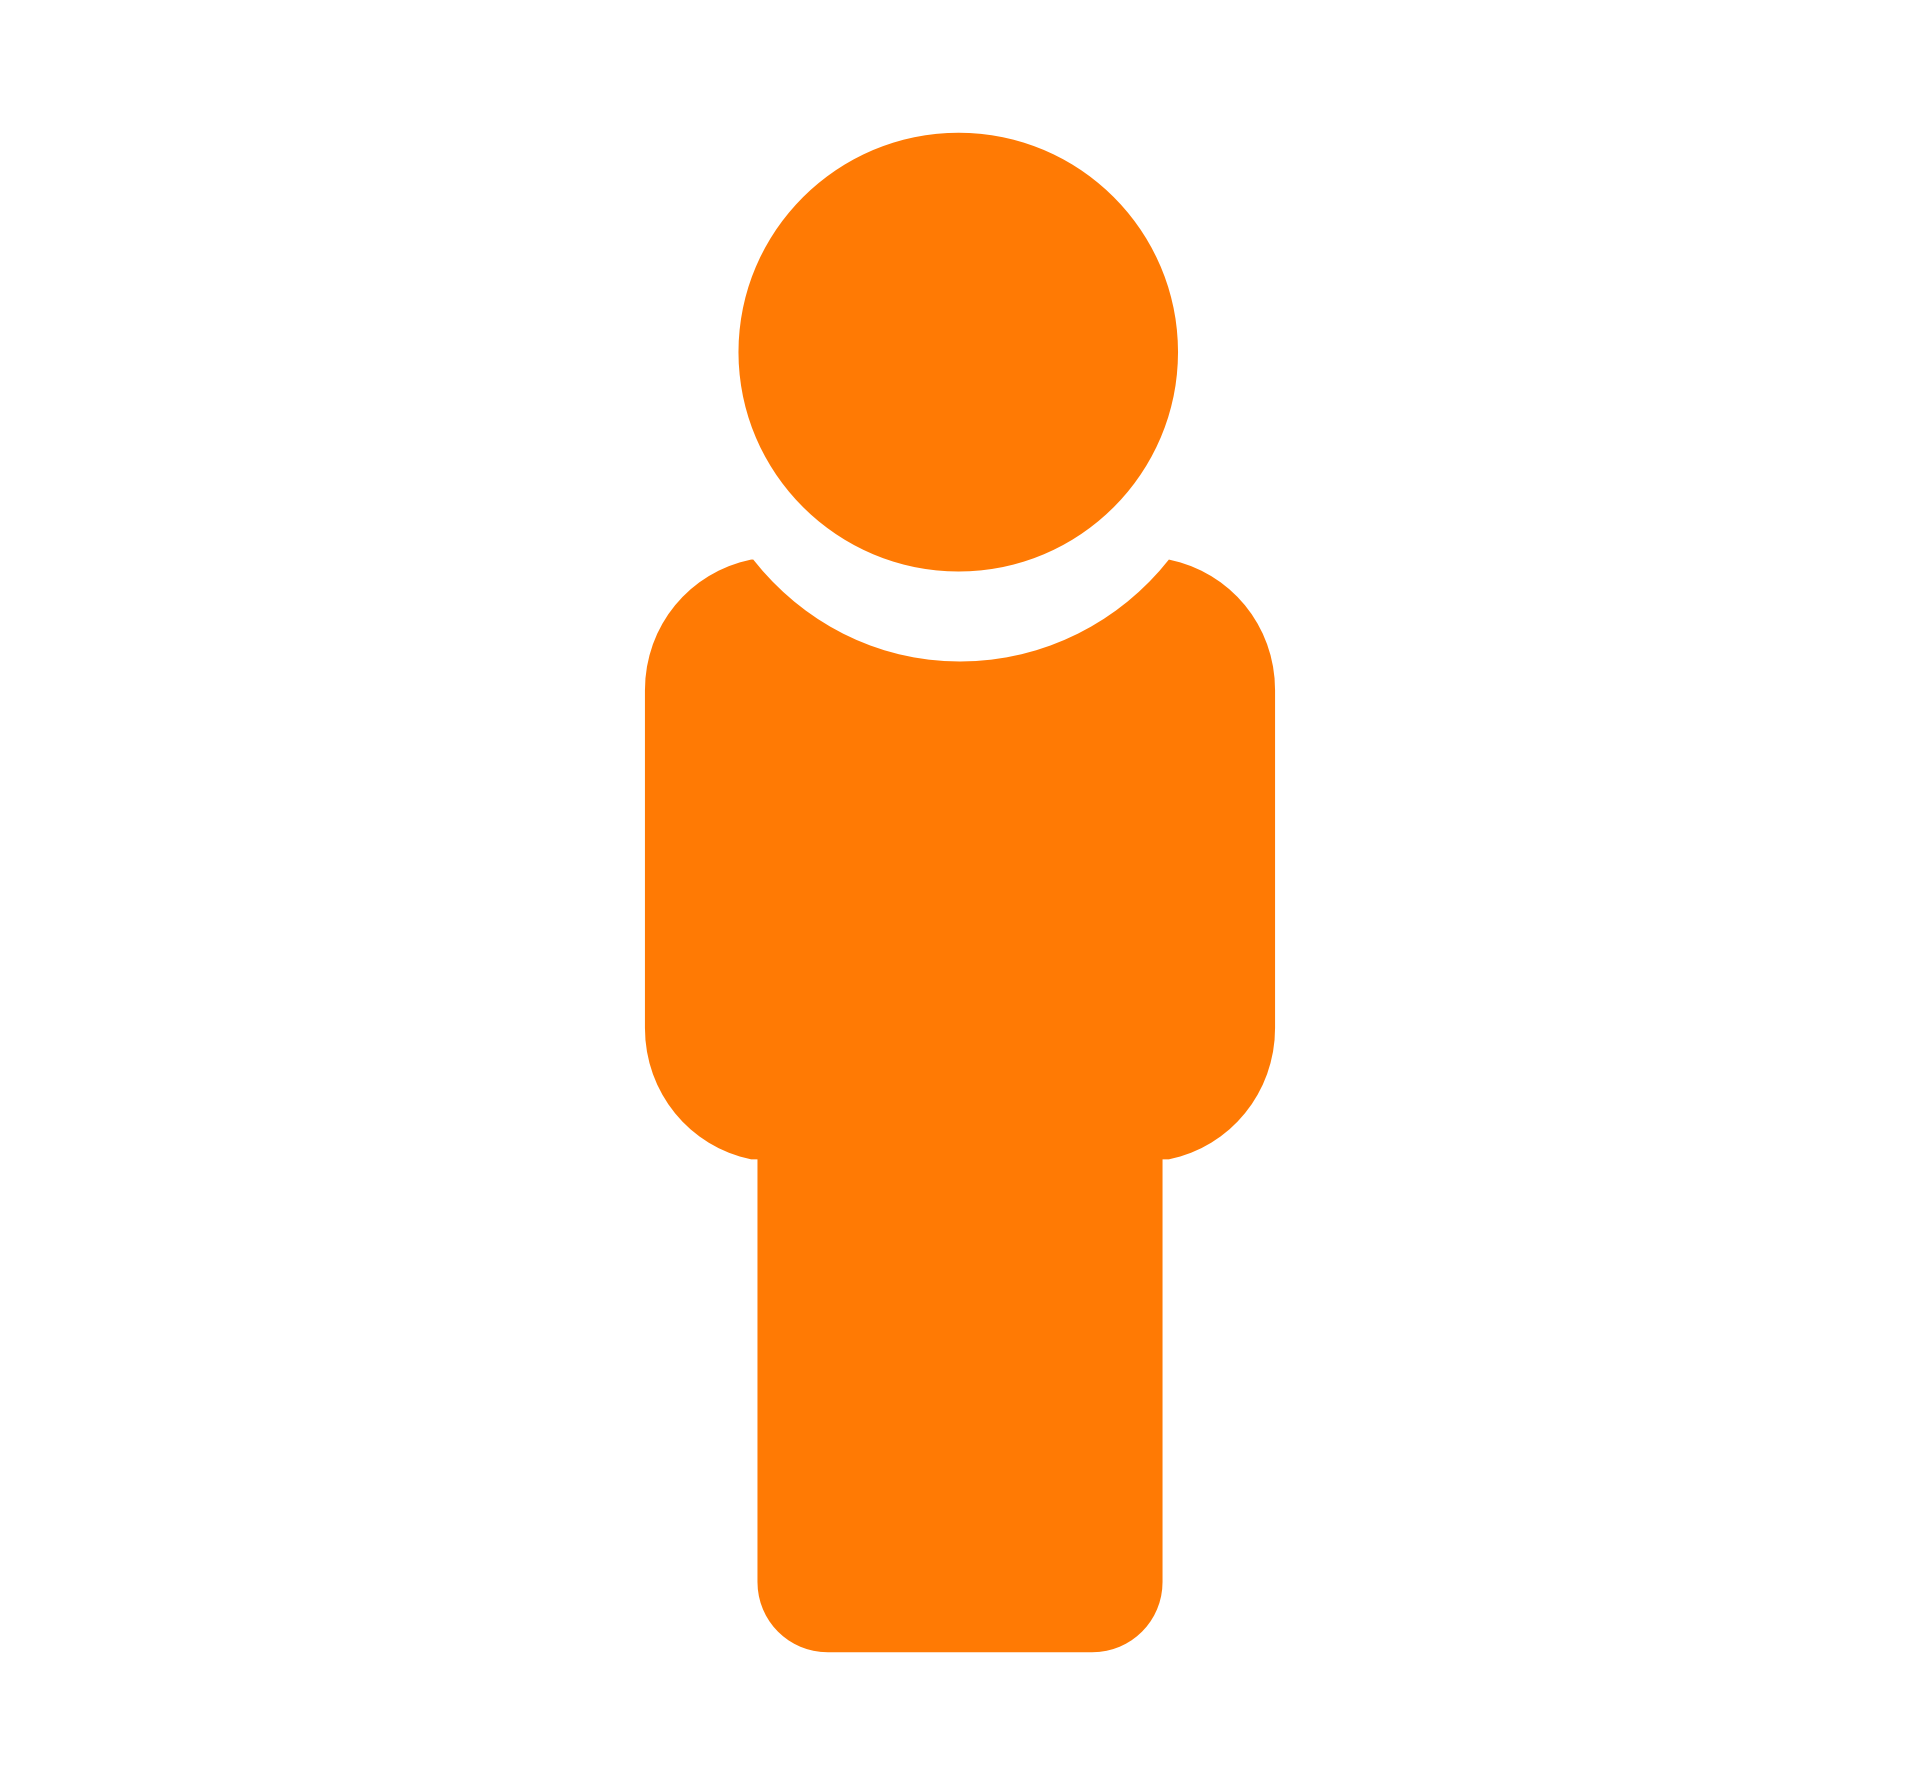 People icon. Значок человека. Пиктограмма человек. Иконка человечек. Оранжевый человечек.